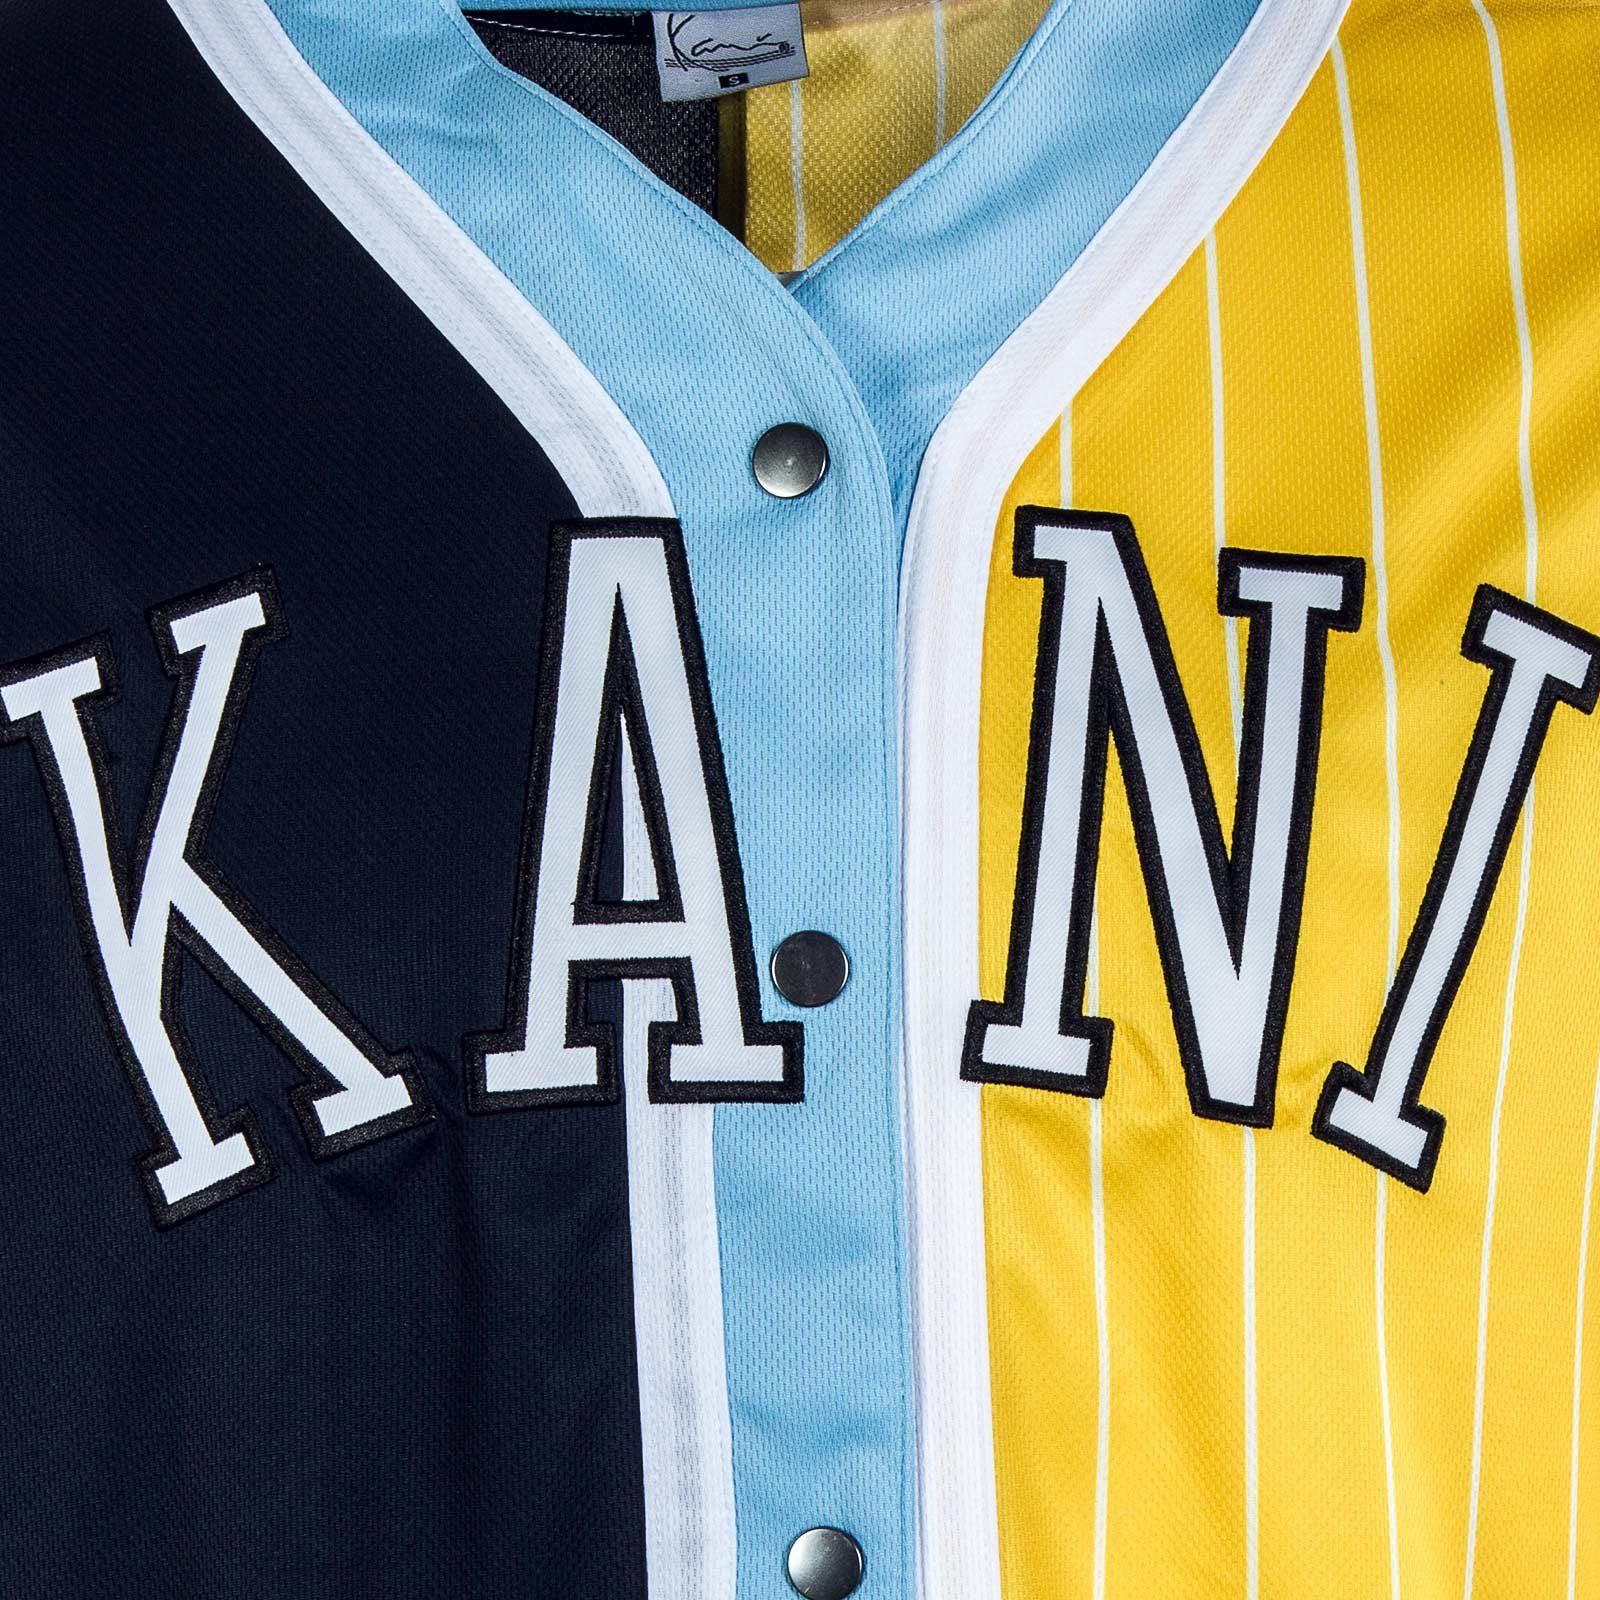 College T-Shirt Shirt Baseball Kani Pinstripes Karl Block